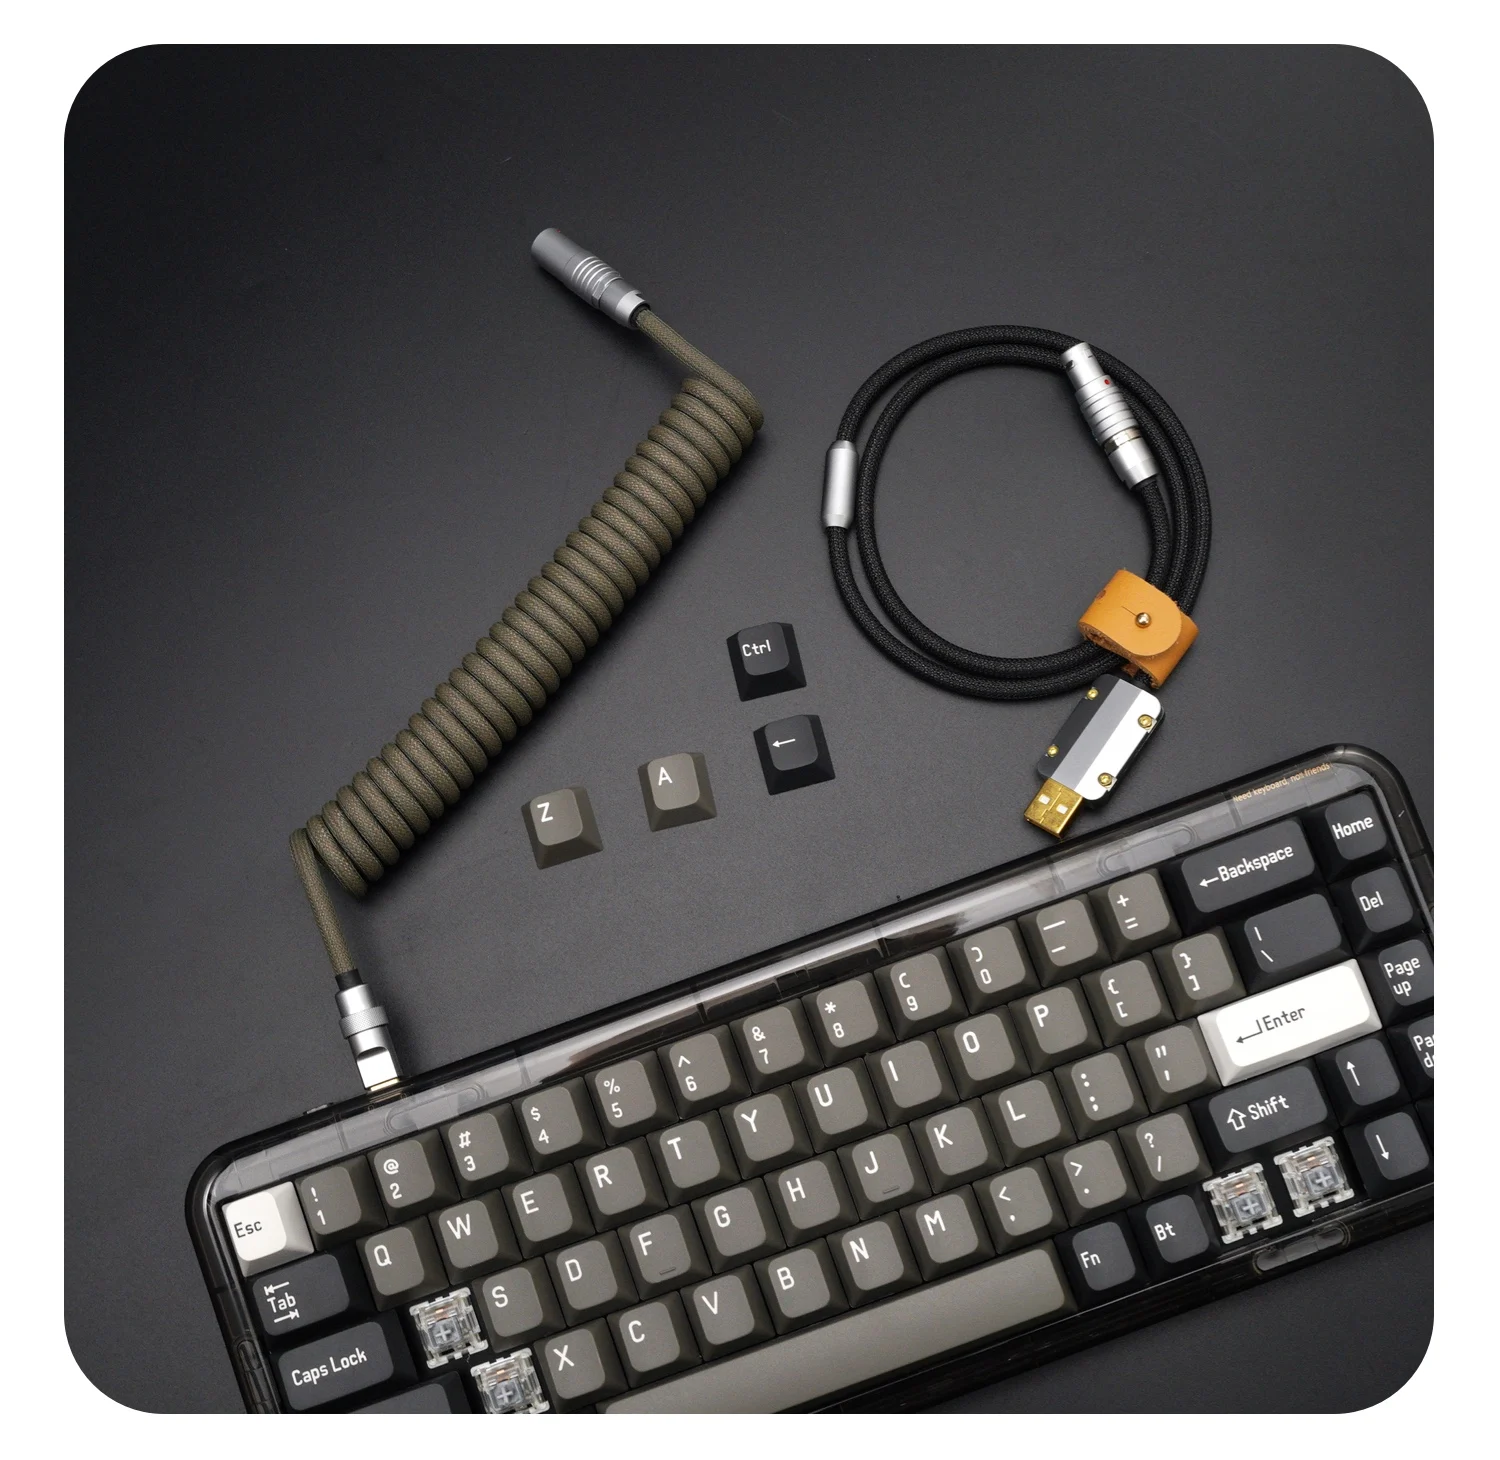 GeekCable tastatura cablu de date MelGeek Mojo68 stralucire retro gri negru din spate Imagine 0